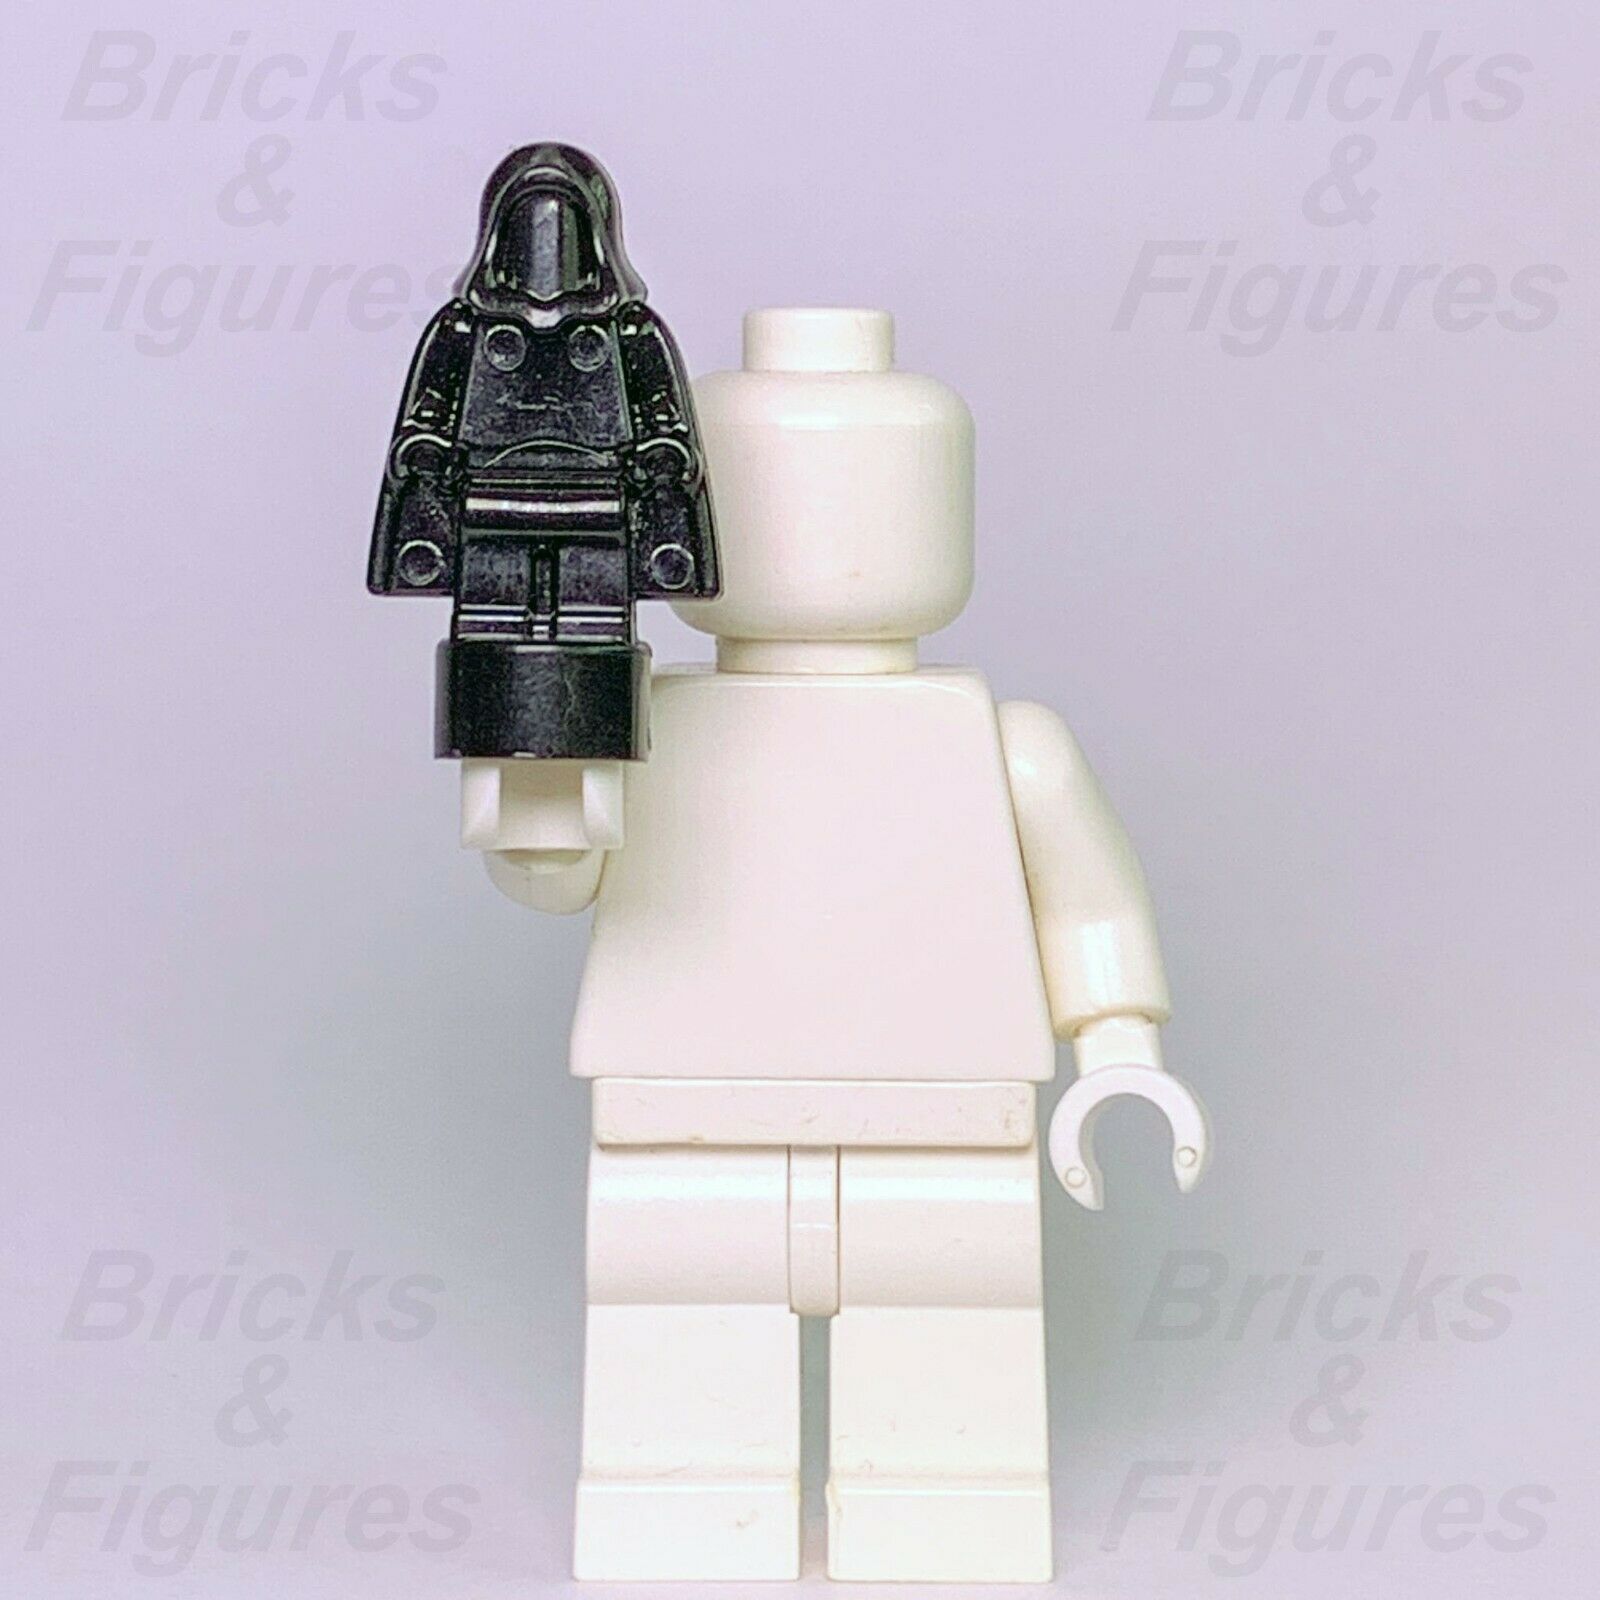 New Star Wars LEGO Statuette Sith Jedi Dementor Statue Mini Part 75251 71043 - Bricks & Figures